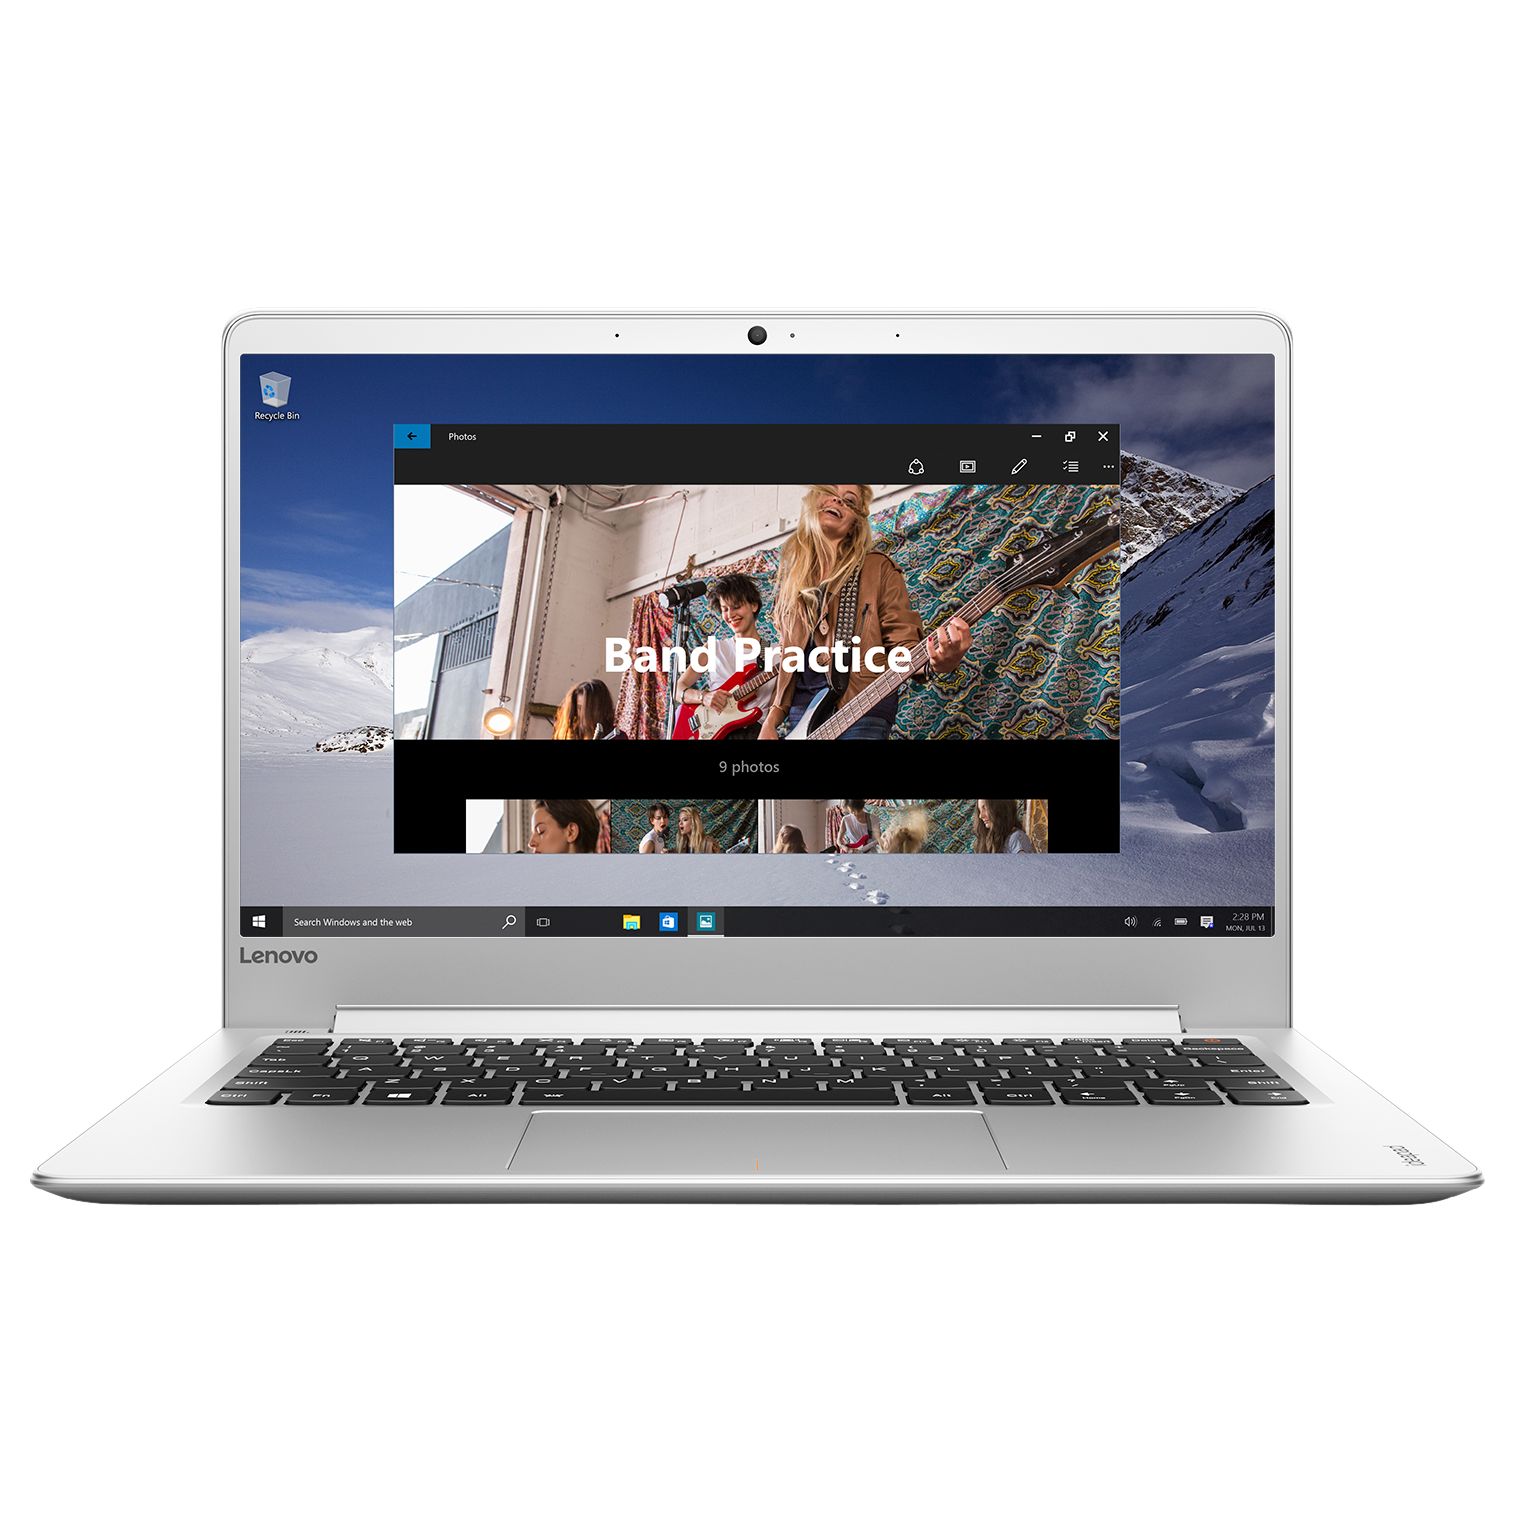 Lenovo Ideapad 710S Laptop, Intel Core i7, 8GB RAM, 256GB SSD, 13.3" Full HD, Silver